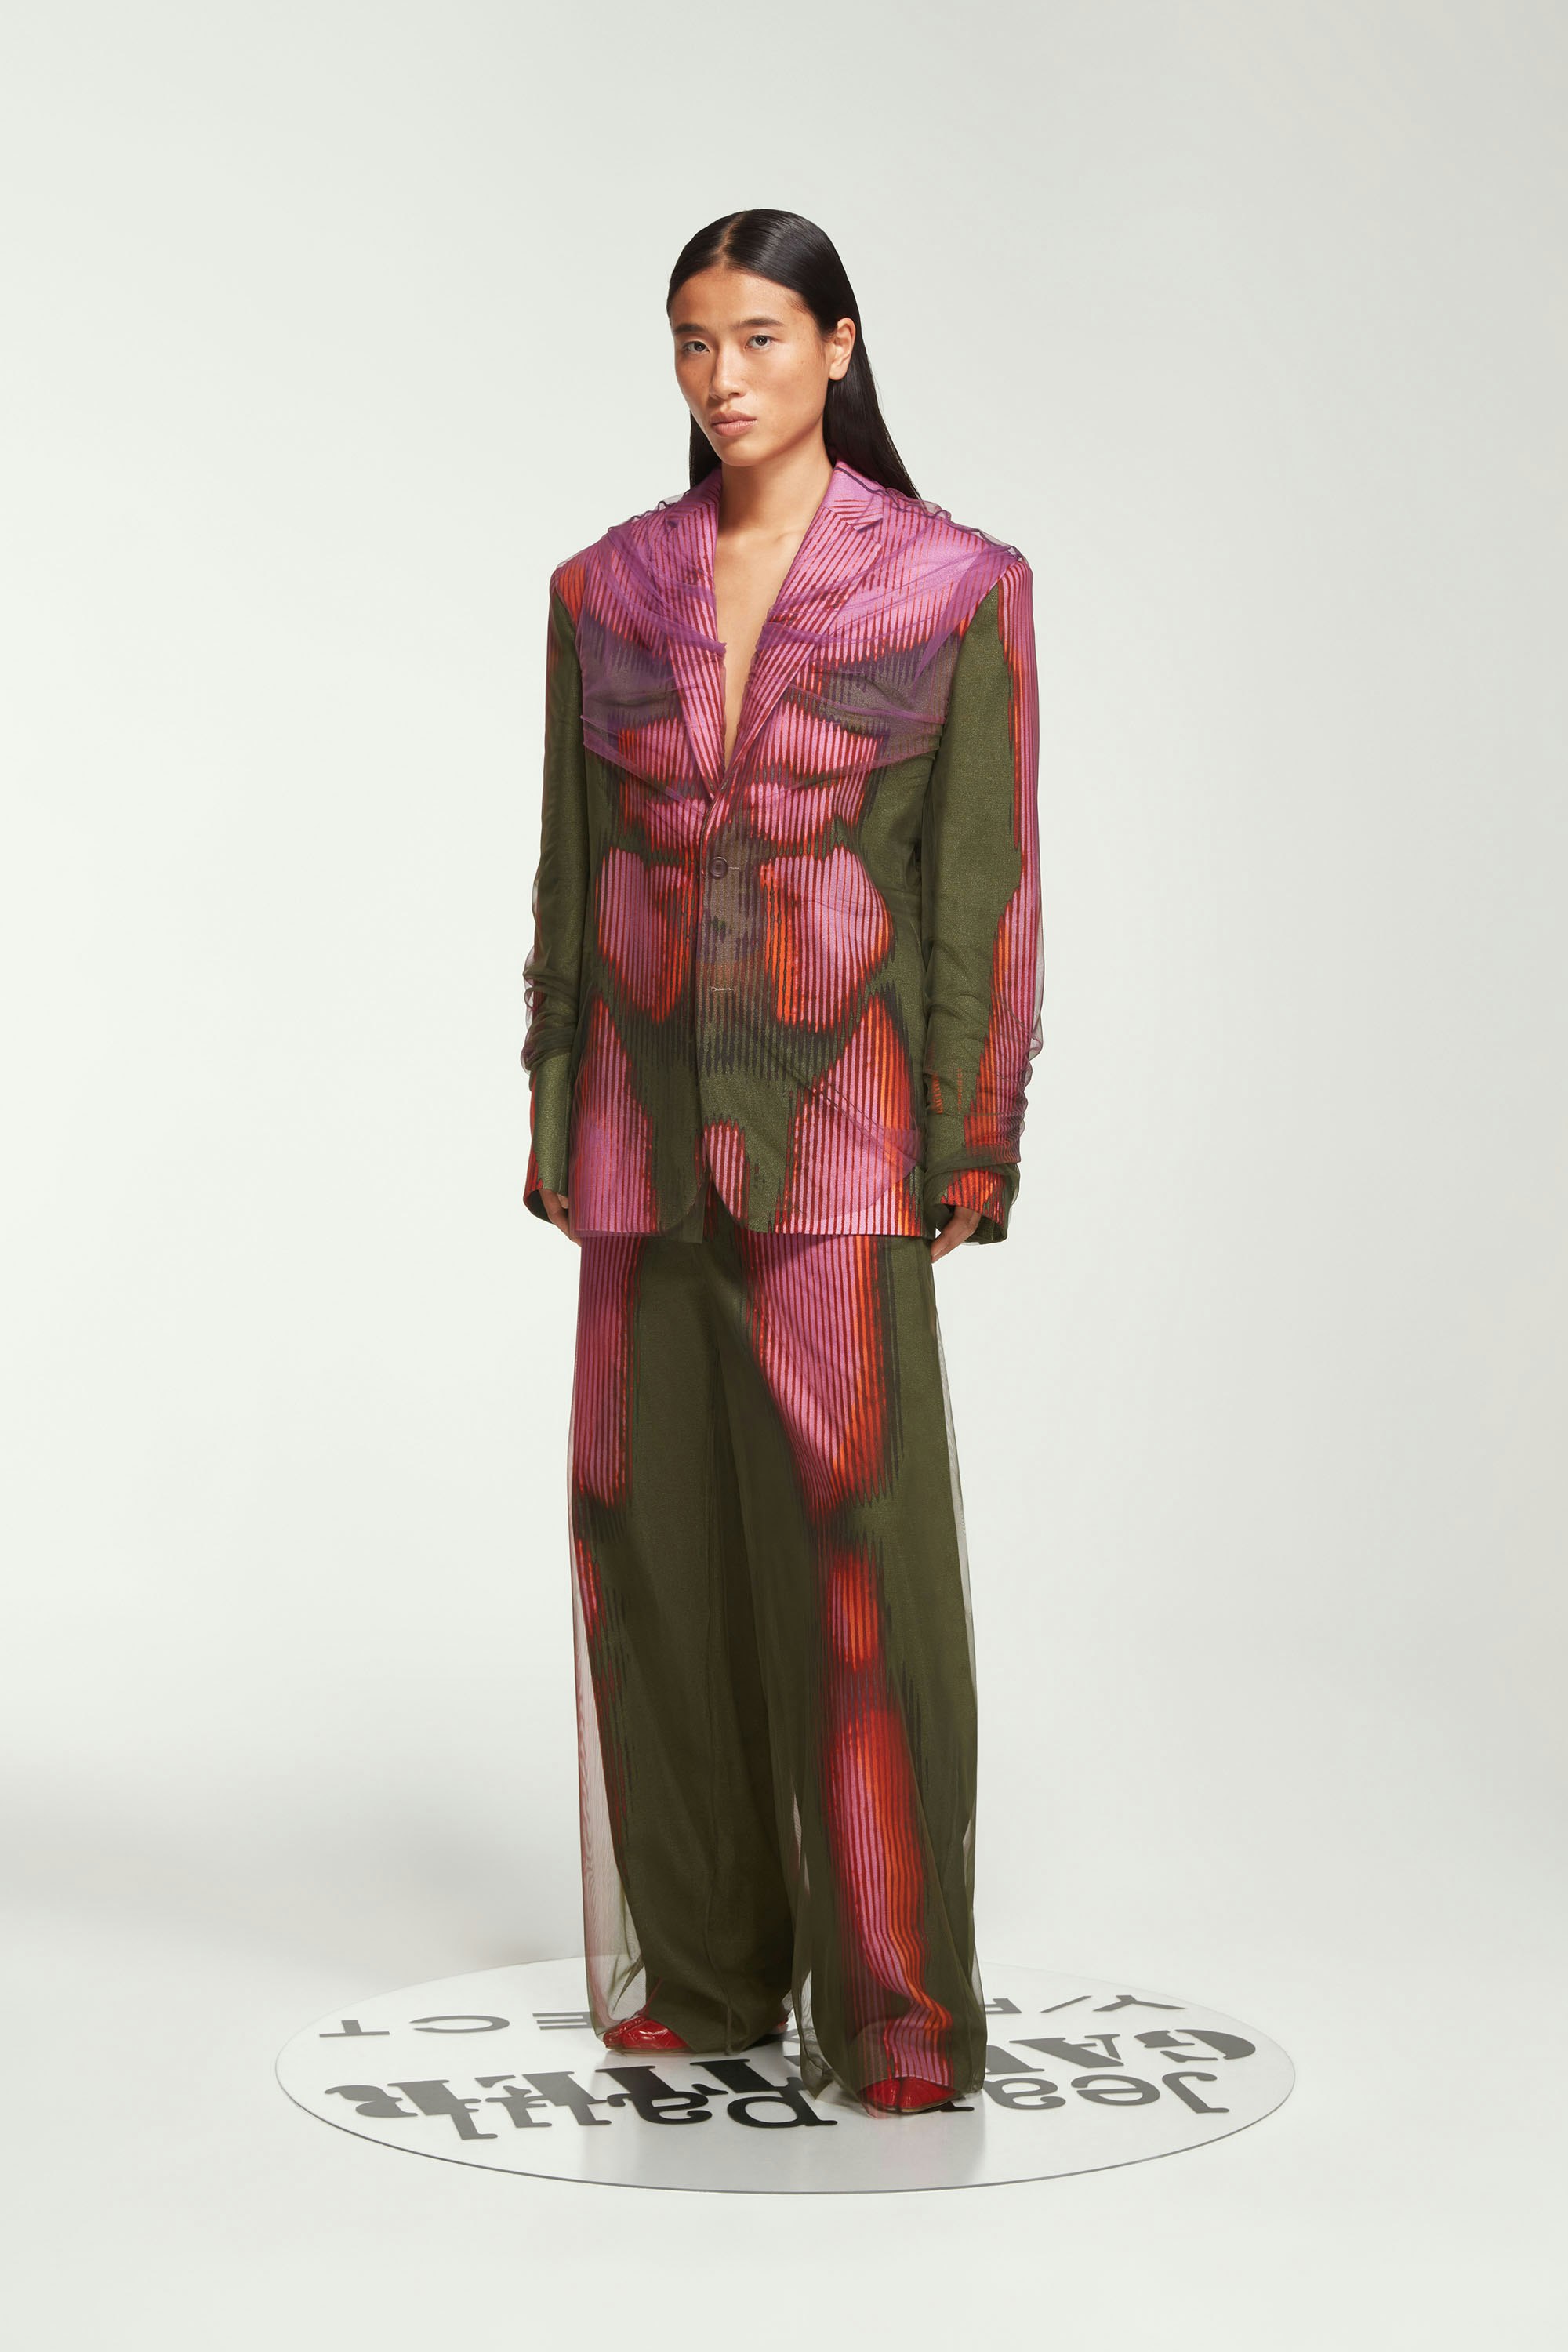 The Pink & Khaki Body Morph Blazer by Jean Paul Gaultier x Y/Project